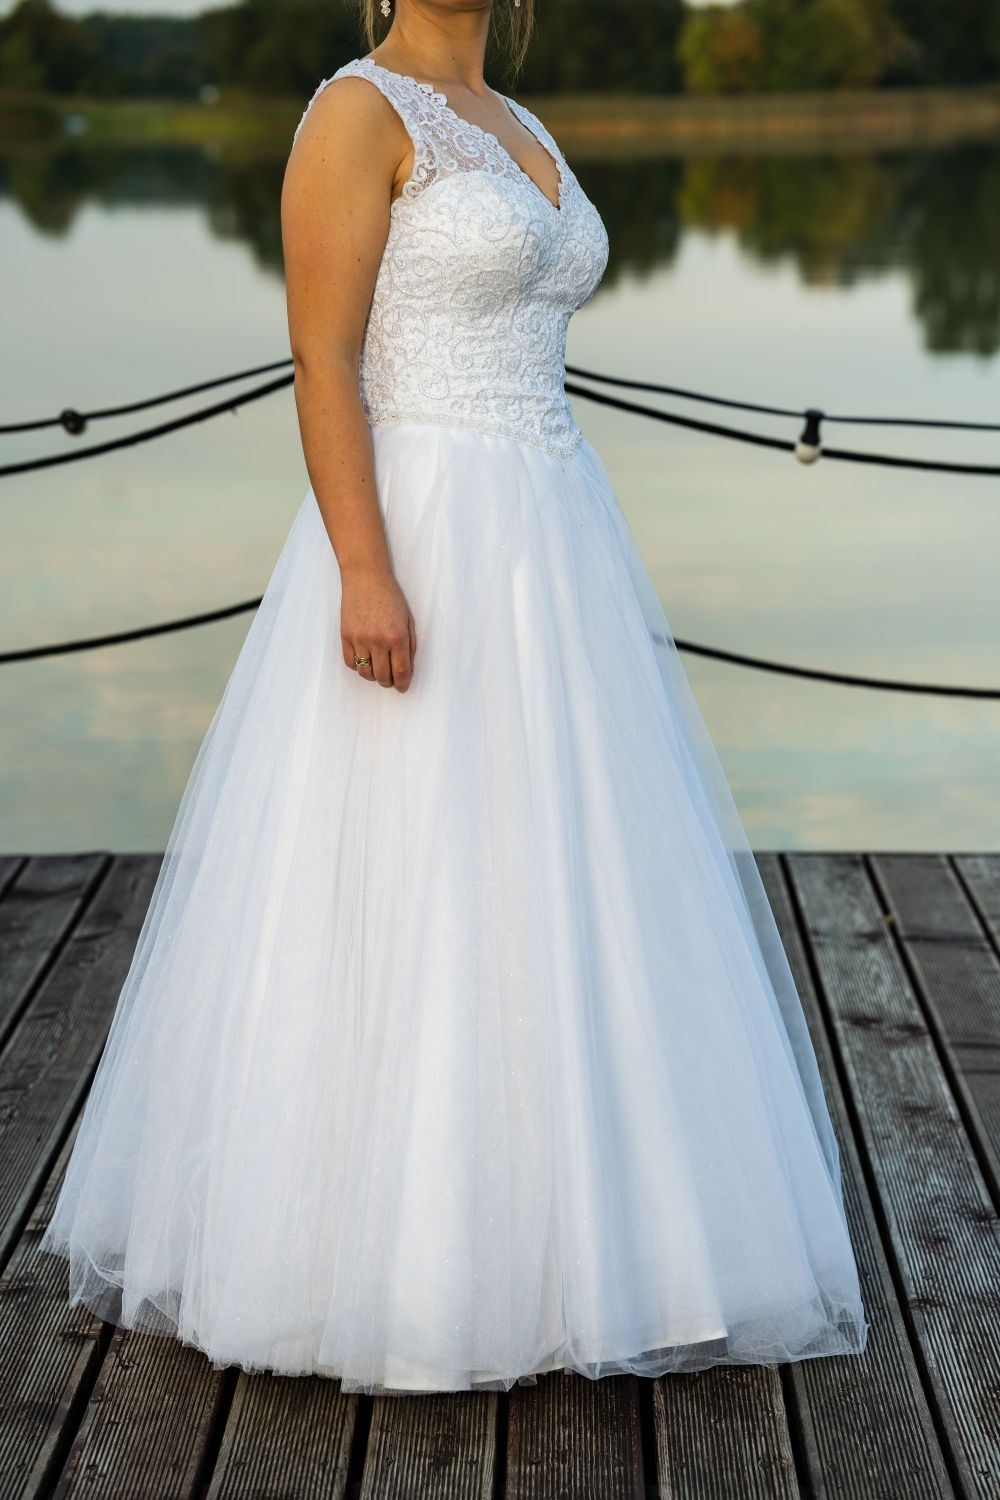 Piękna suknia ślubna na standardową sylwetkę